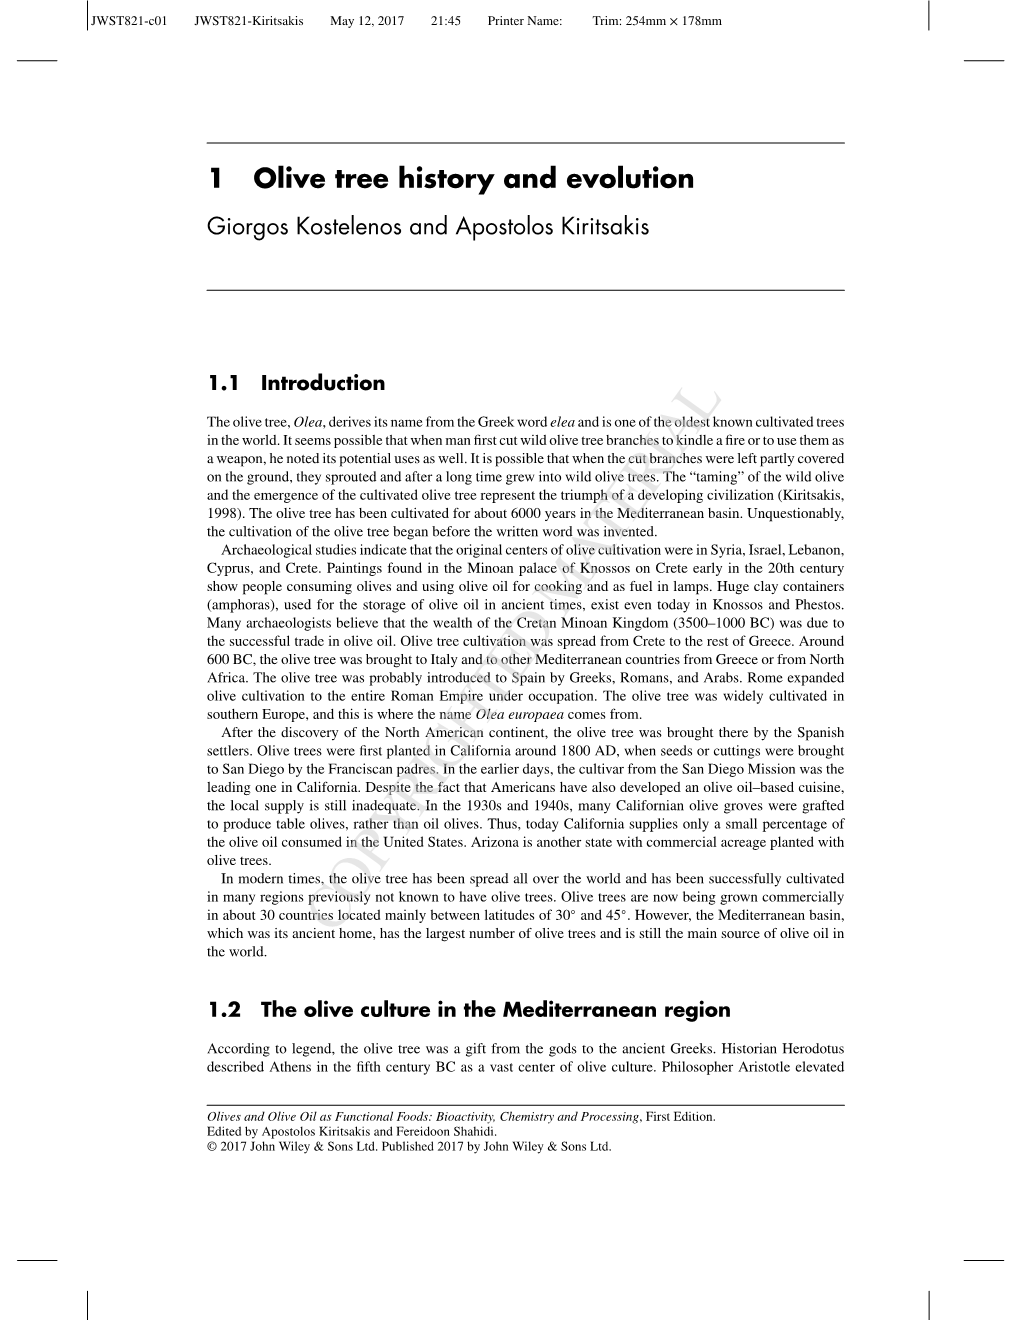 1 Olive Tree History and Evolution Giorgos Kostelenos and Apostolos Kiritsakis